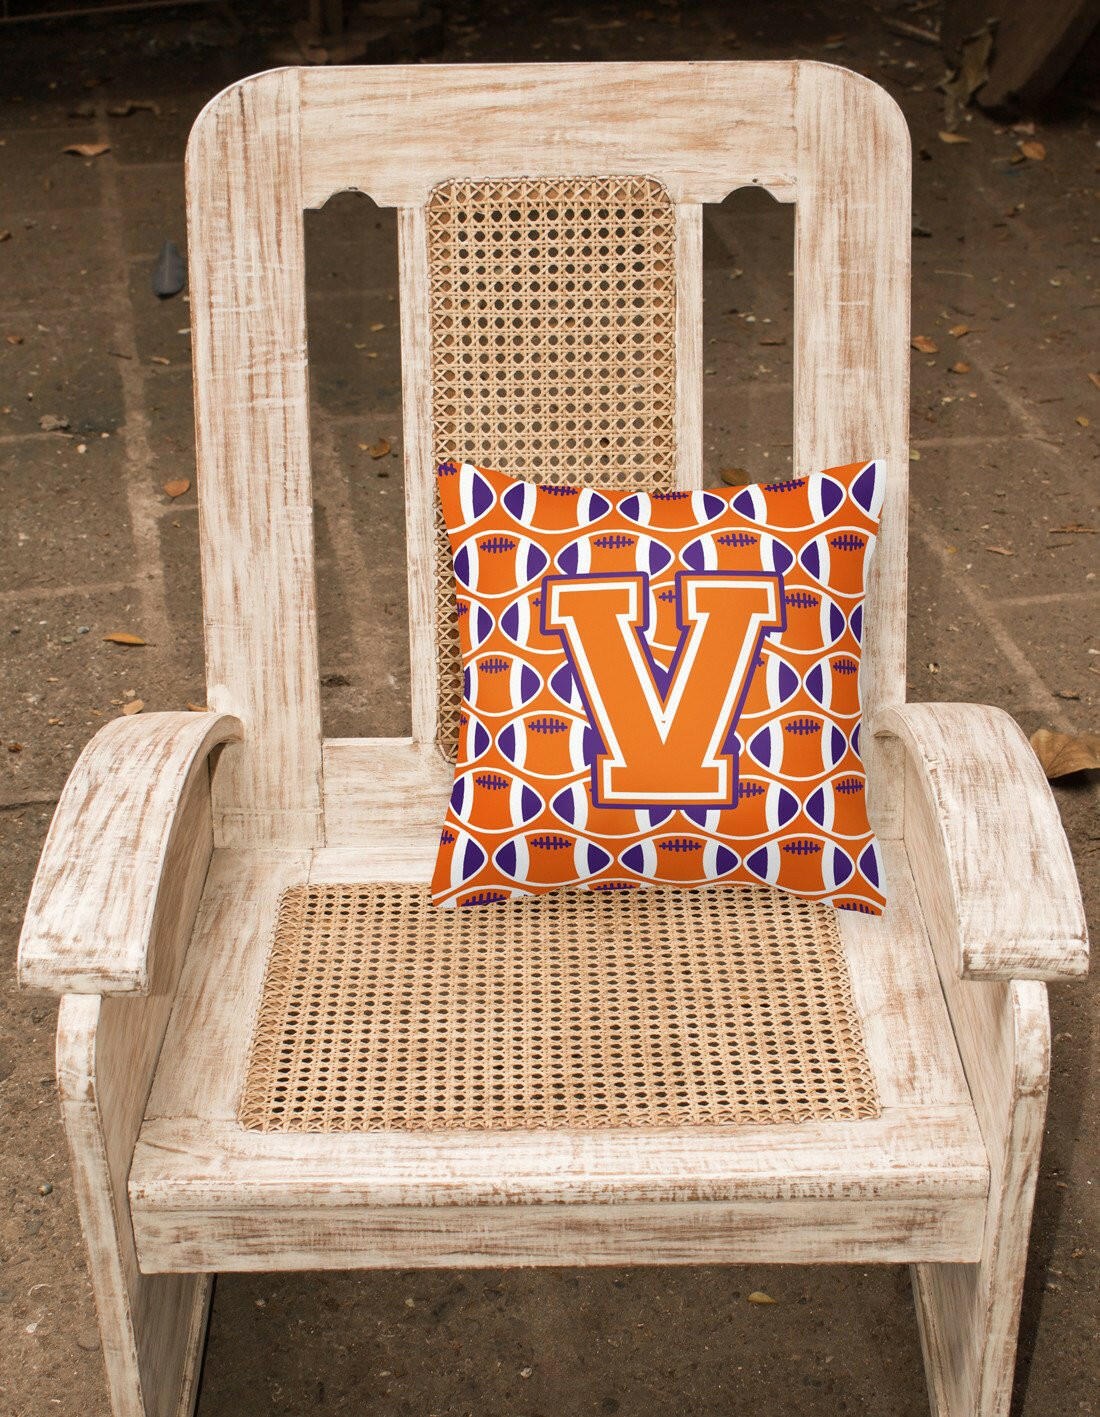 Letter V Football Orange, White and Regalia Fabric Decorative Pillow CJ1072-VPW1414 by Caroline's Treasures